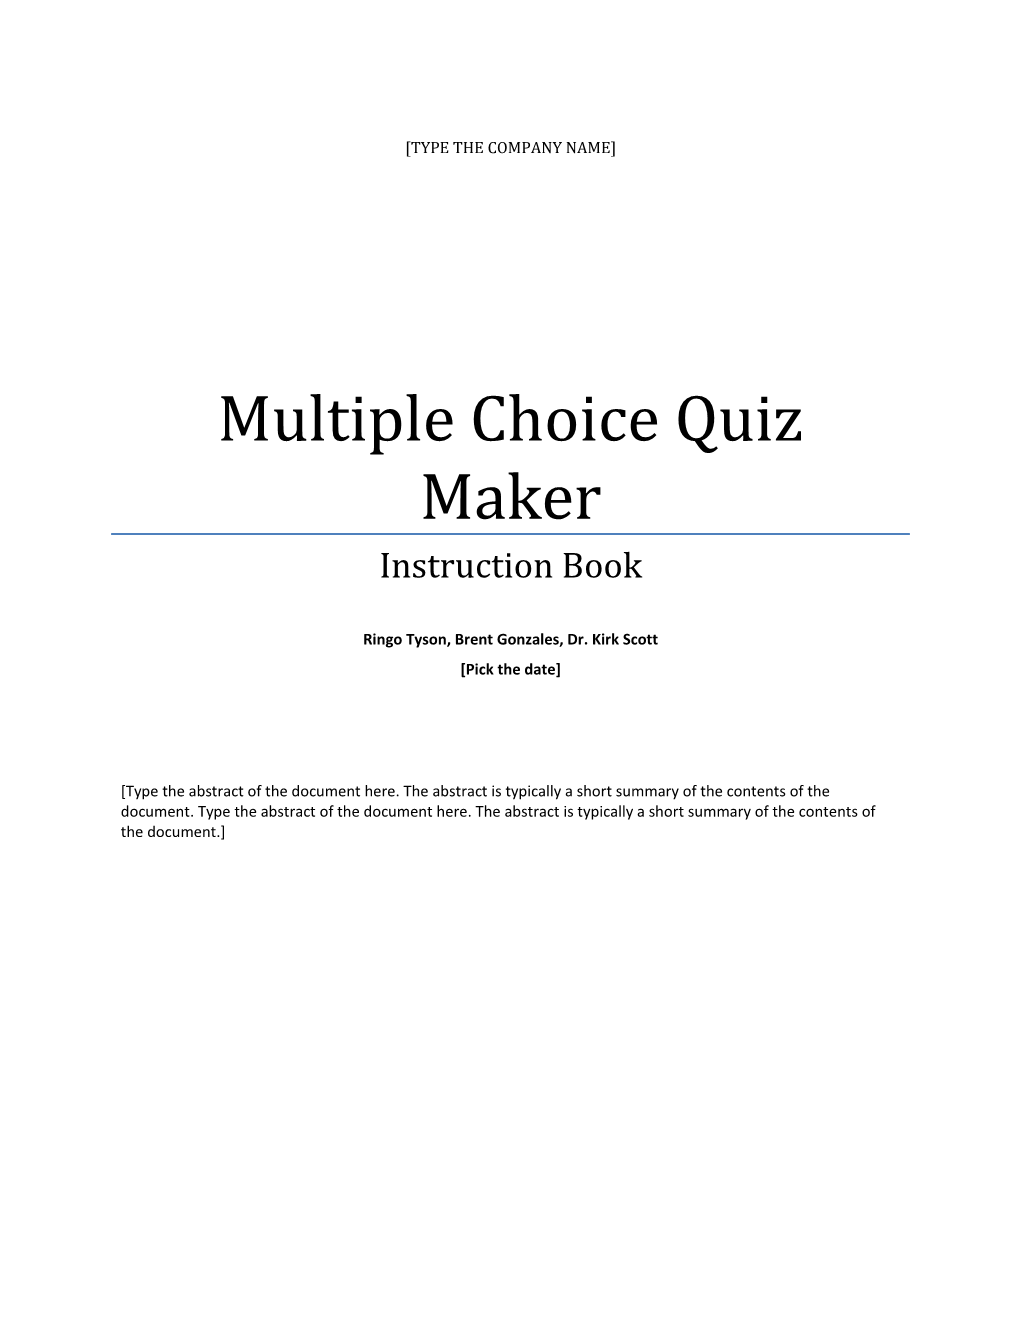 Multiple Choice Quiz Maker